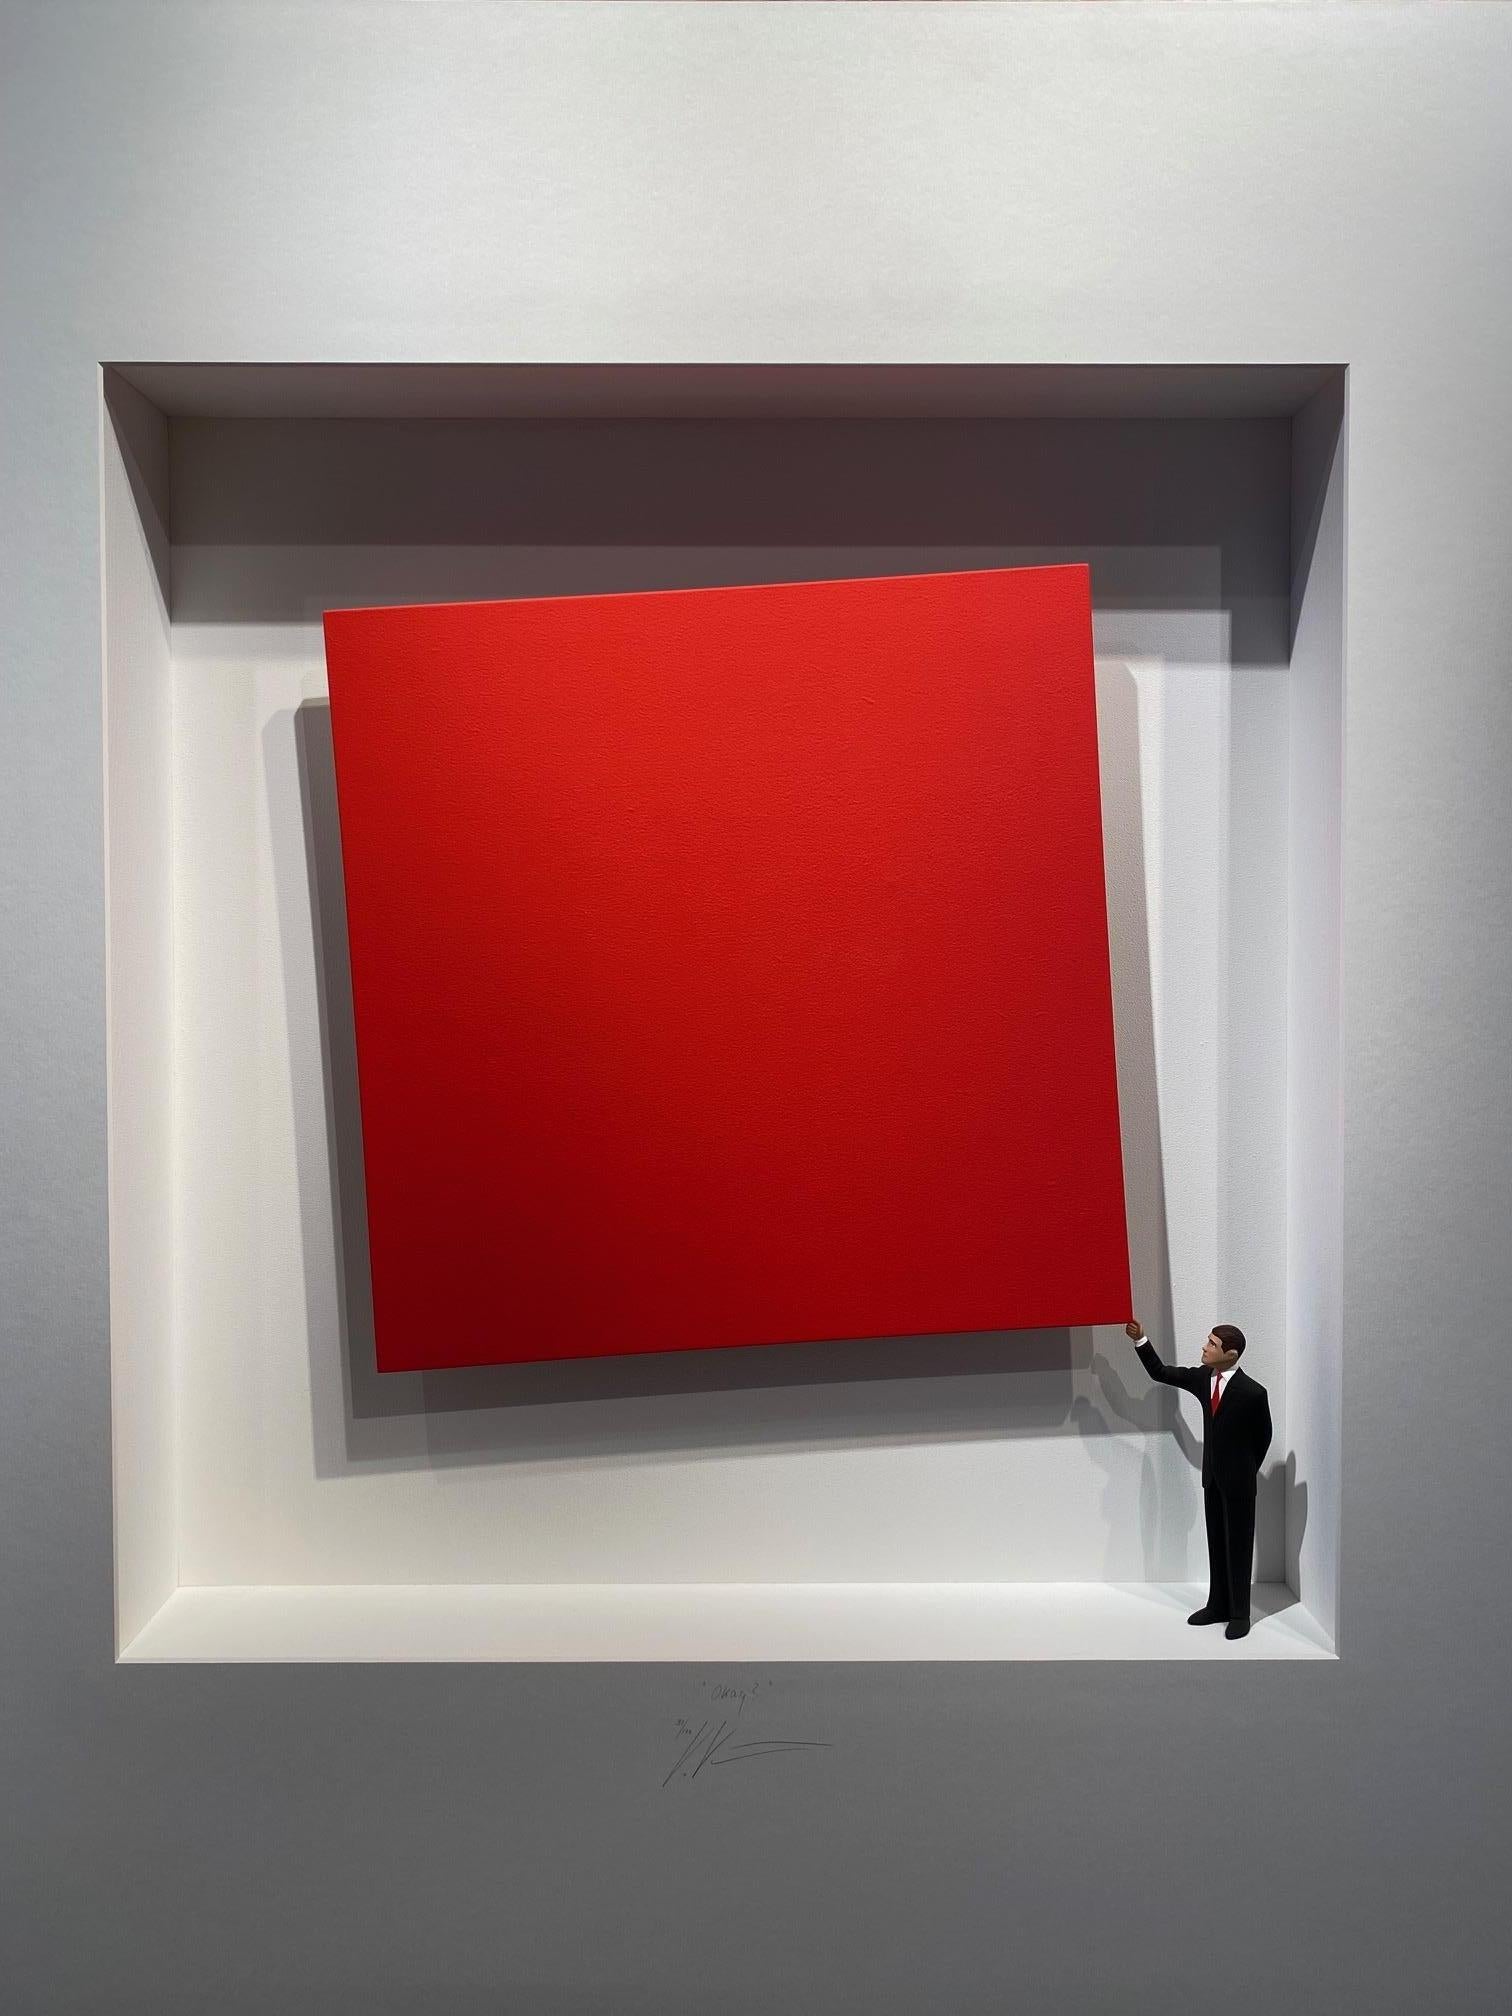 Okay? - mixed media art work, contemporary, minimalist red square constructivist